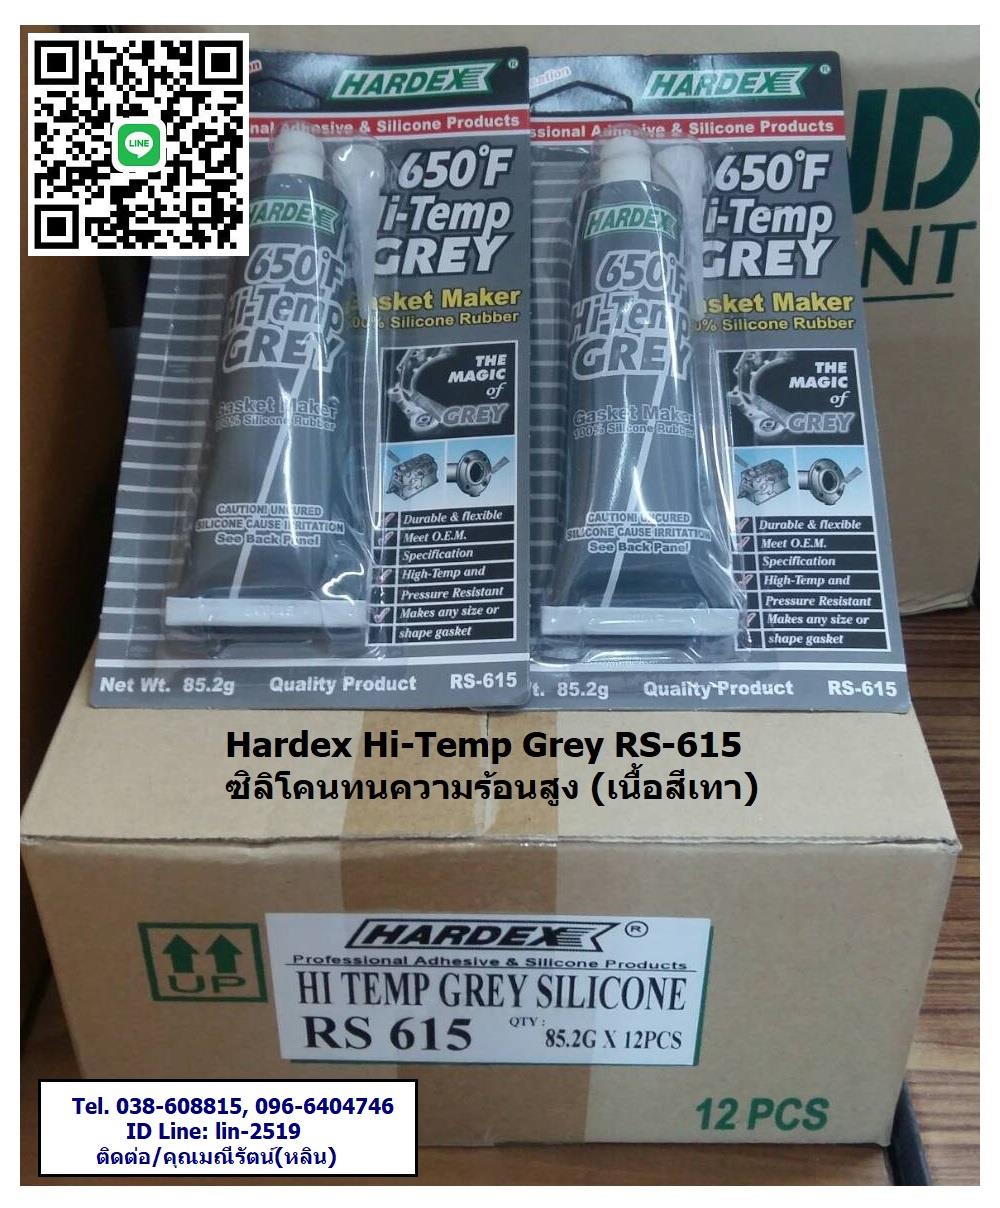 Hardex Hi-Temp Gray Gasket Maker RS-615 ซิลิโคนประเก็นเหลวทนความร้อน ซีลกันน้ำและน้ำมันของทุกชิ้นส่วนอุปกรณ์ต่าง ๆ ที่เกี่ยวกับความร้อนโดยเฉพาะของเครื่องยนต์,Hardex Hi-Temp Grey, ซิลิโคนทนความร้อนสีเทา, ซิลิโคนปะเก็นเหลว, กาวซิลิโคน, ซีลยาแนวโลหะที่มีความร้อน, gasket maker,,็Hardex,Chemicals/Silicon